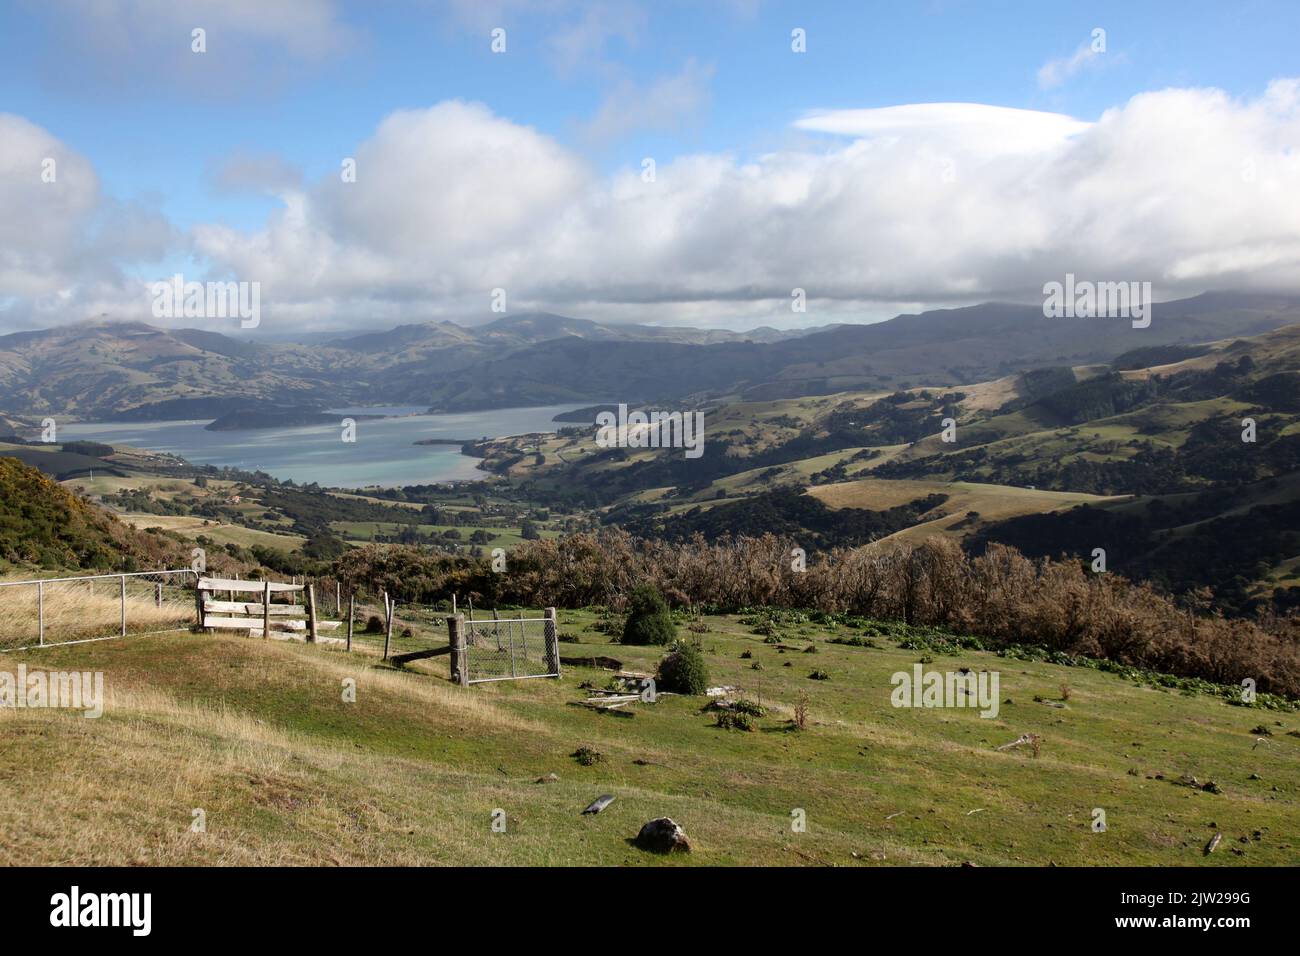 Windswept farming landscape near Akaroa in New Zealand's South Island. The Banks peninsula region is a tourist destination. Stock Photo